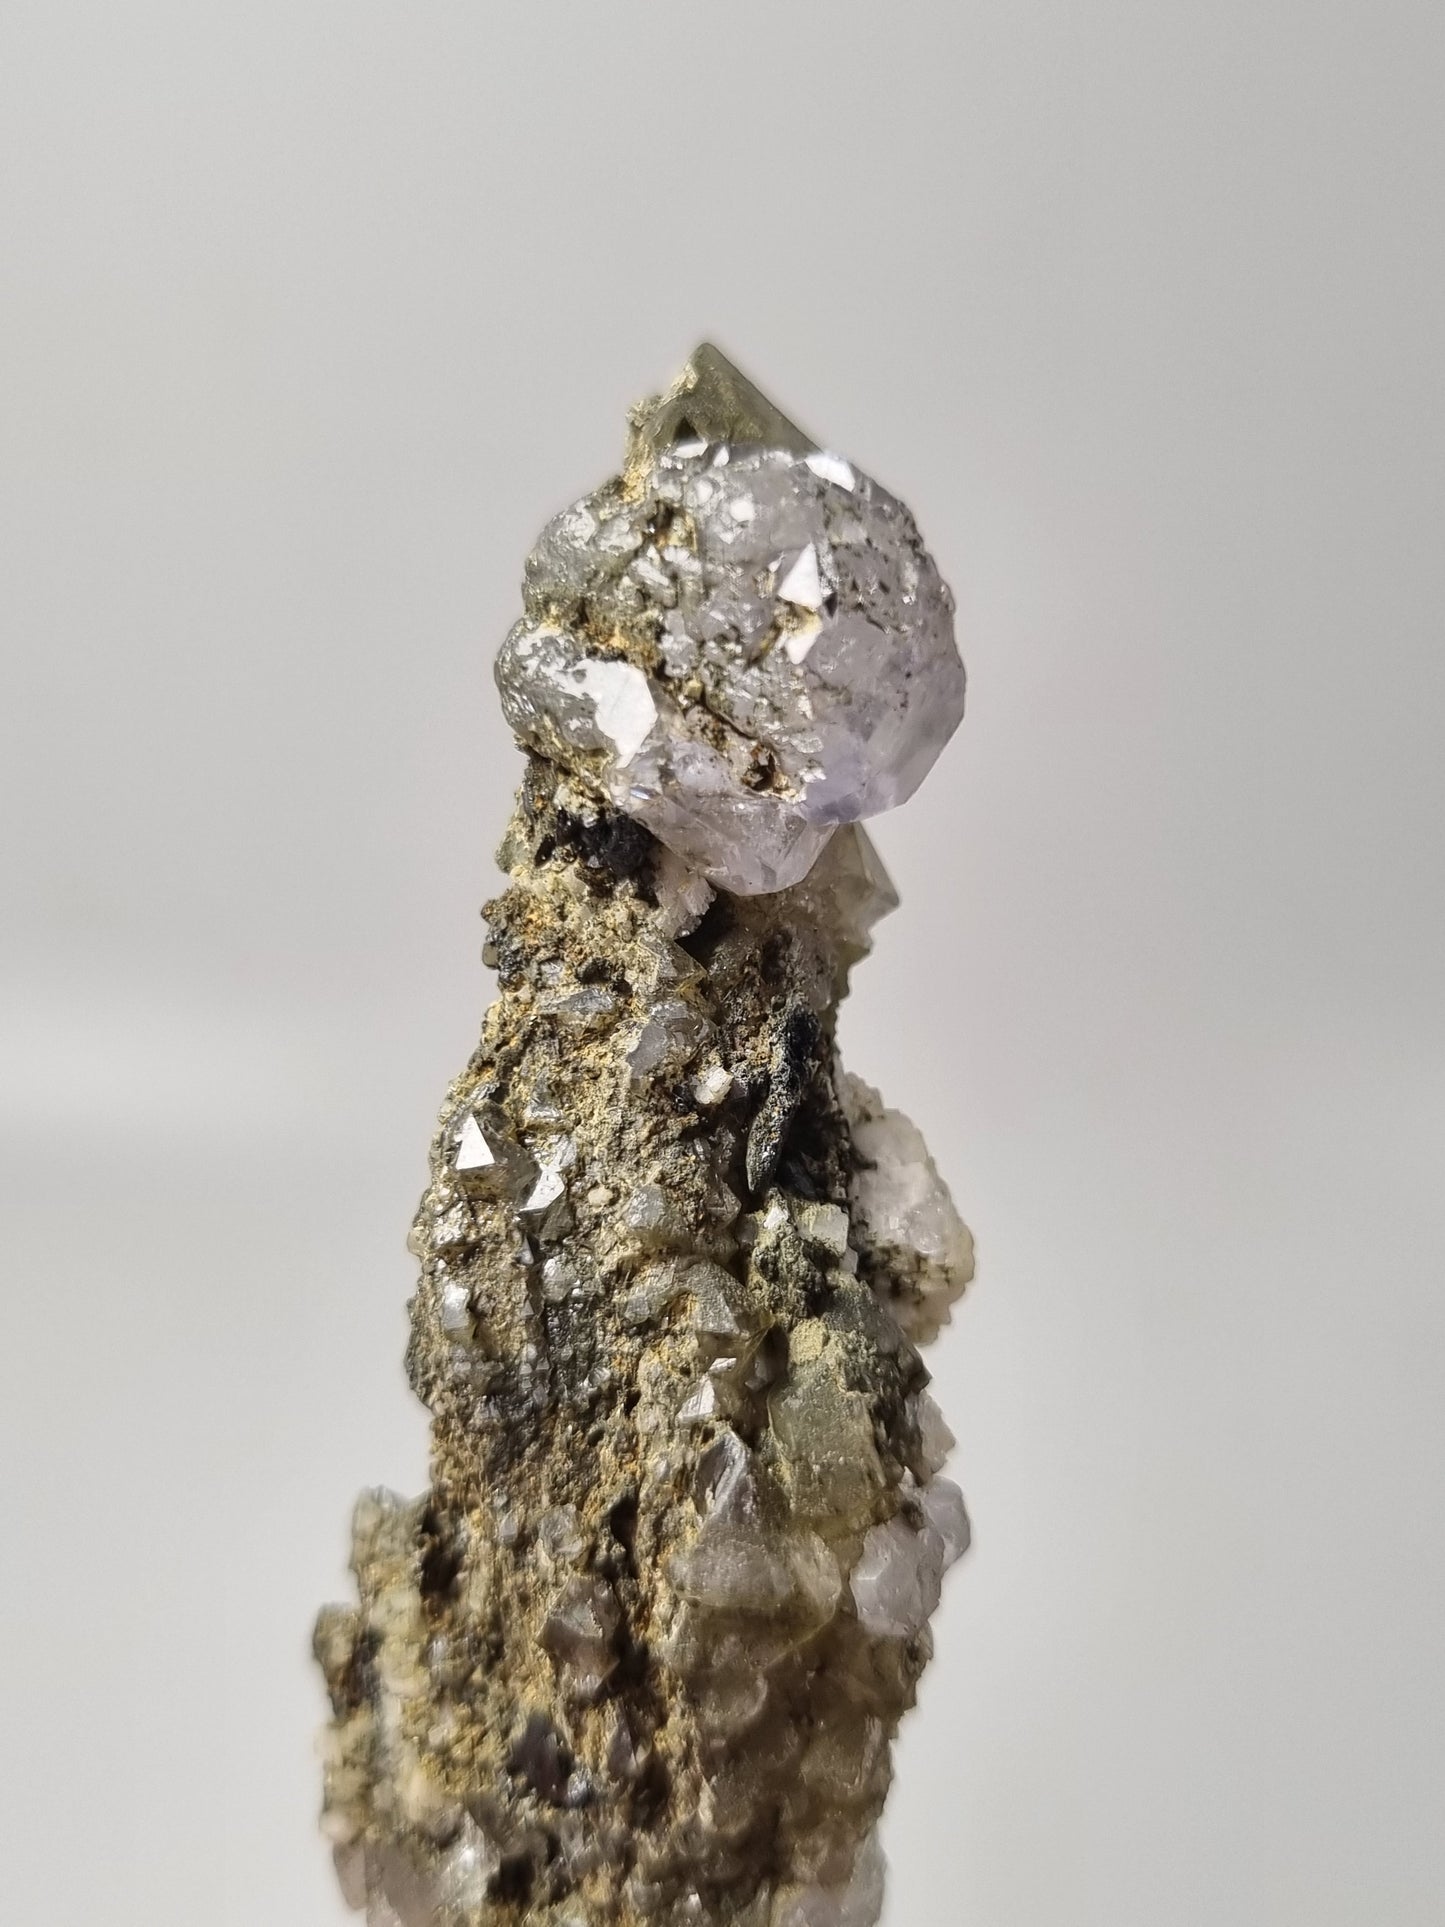 Stunning Mineral Specimen, Elestial Scepter like, Cumberland Habit Quartz with Fluorite